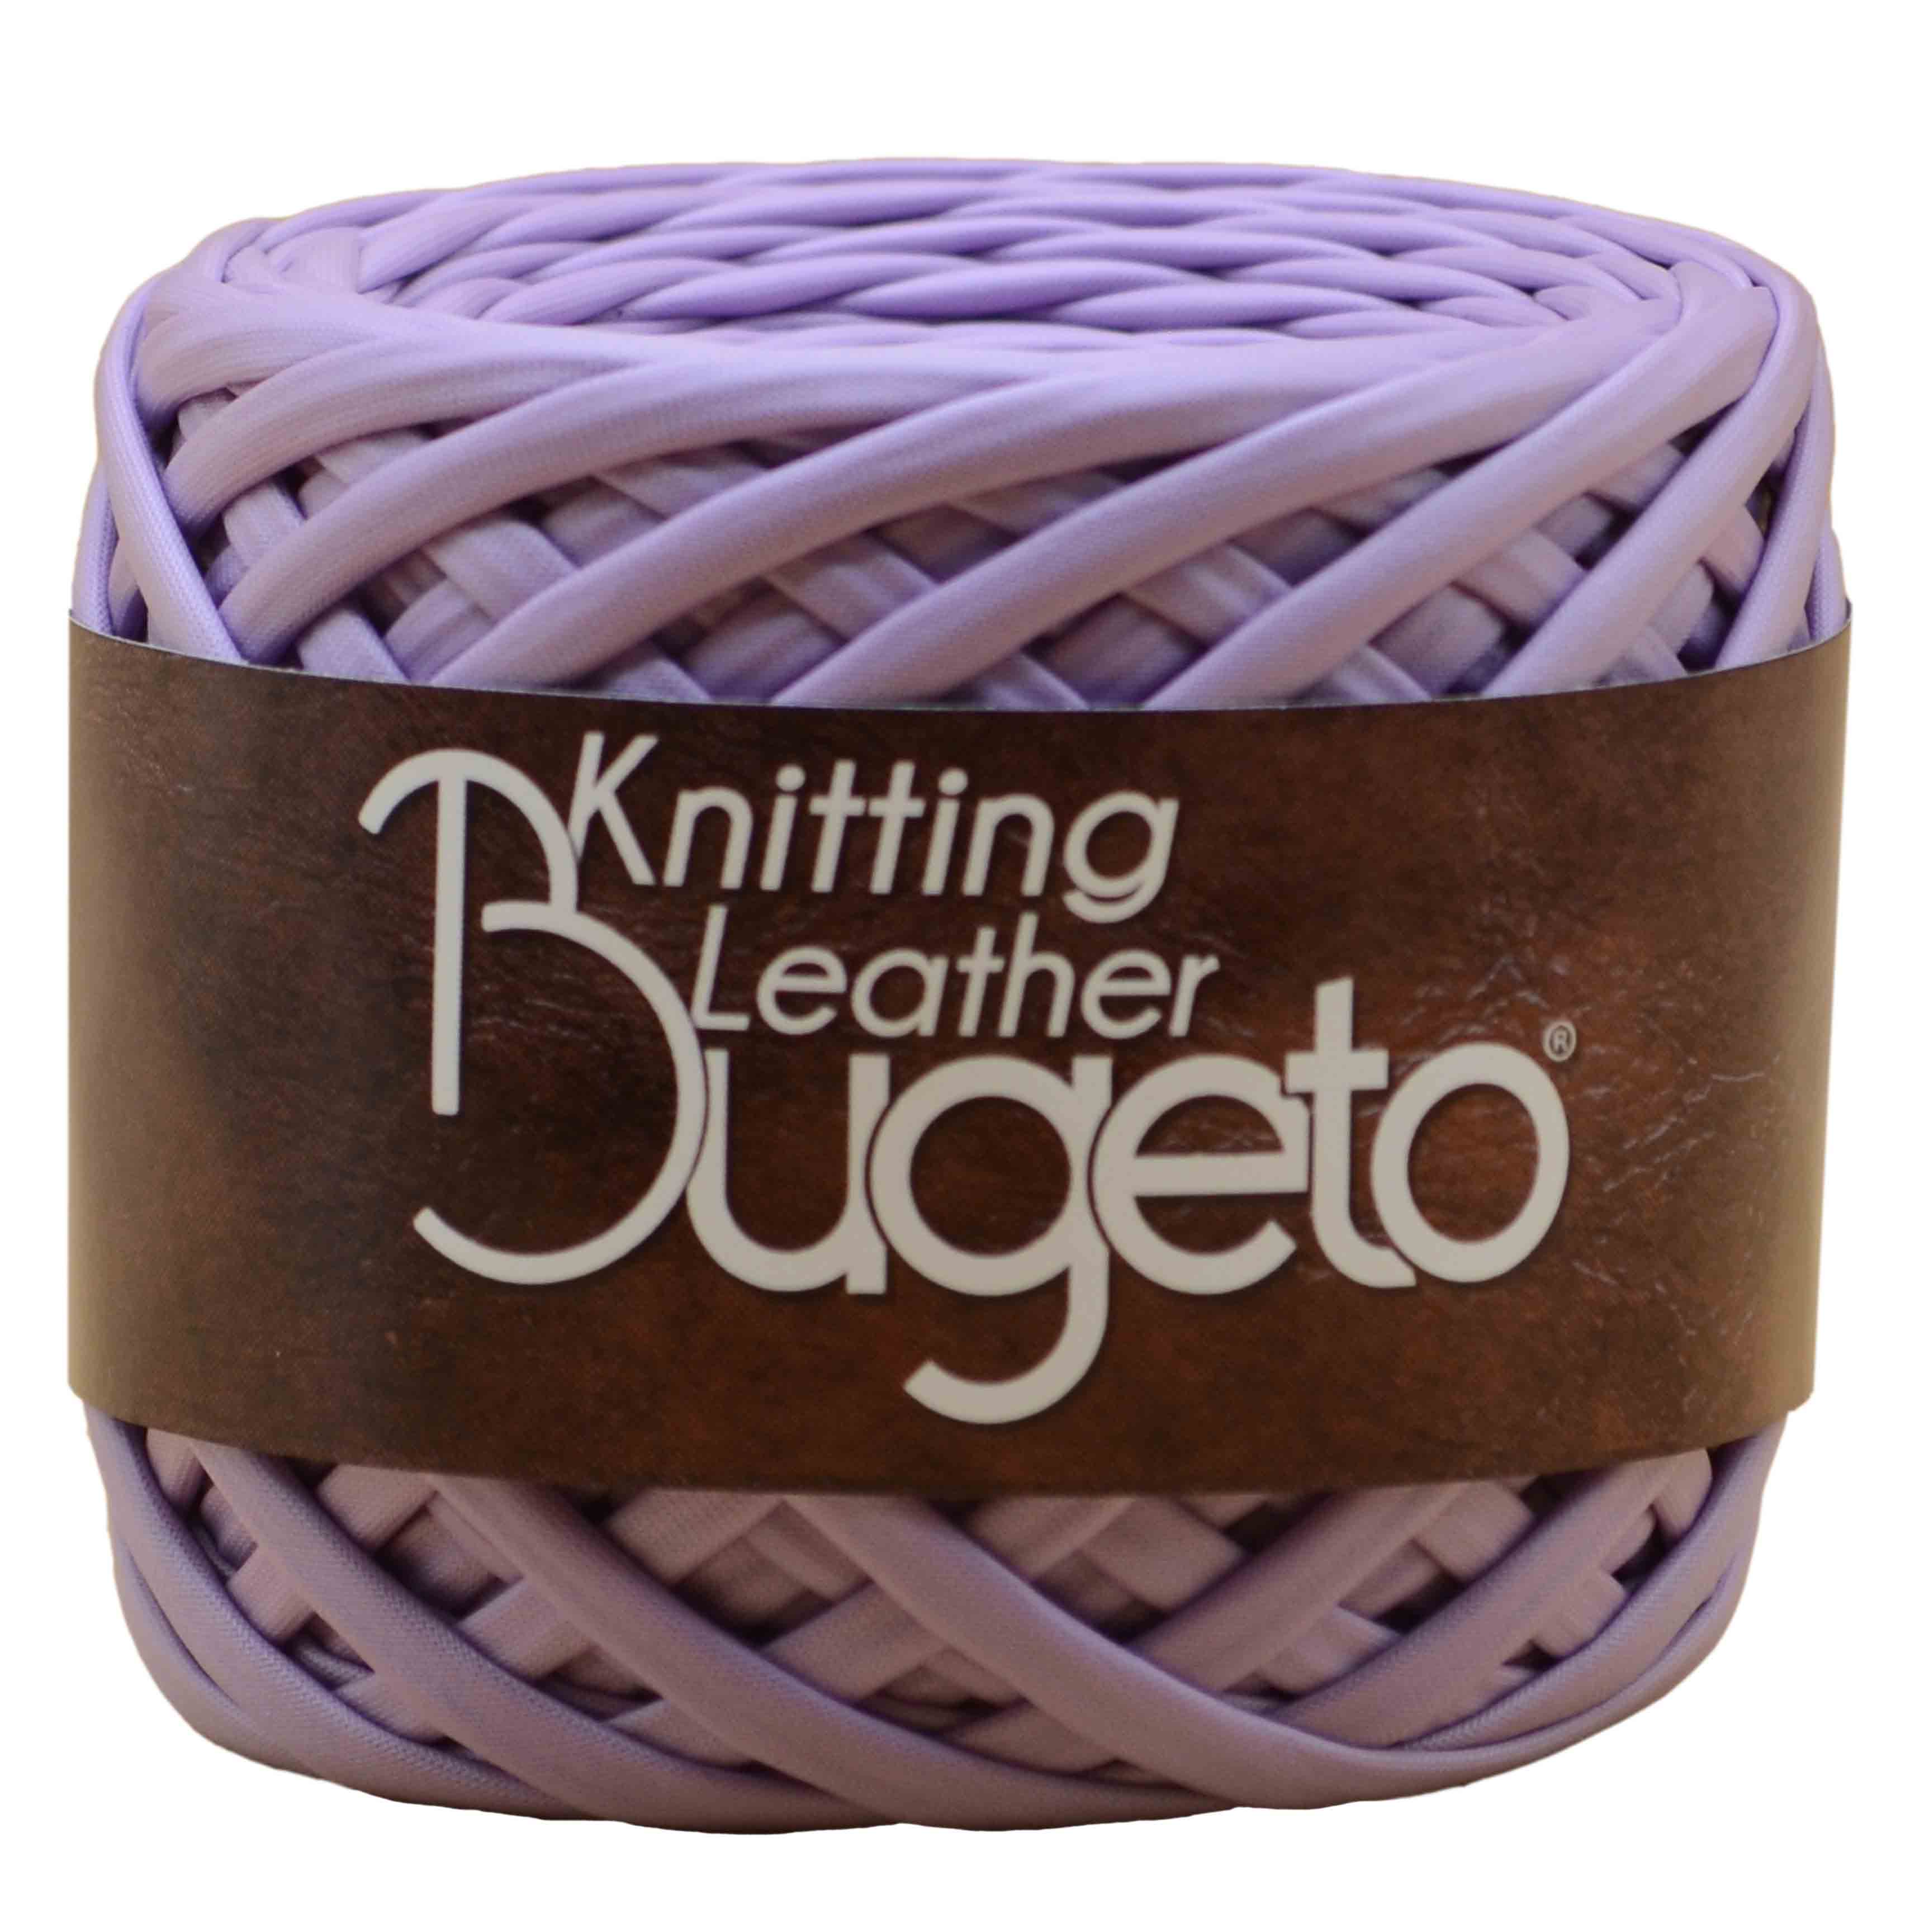 leather look like yarn leather yarn knitting leather yarns bugeto yarn